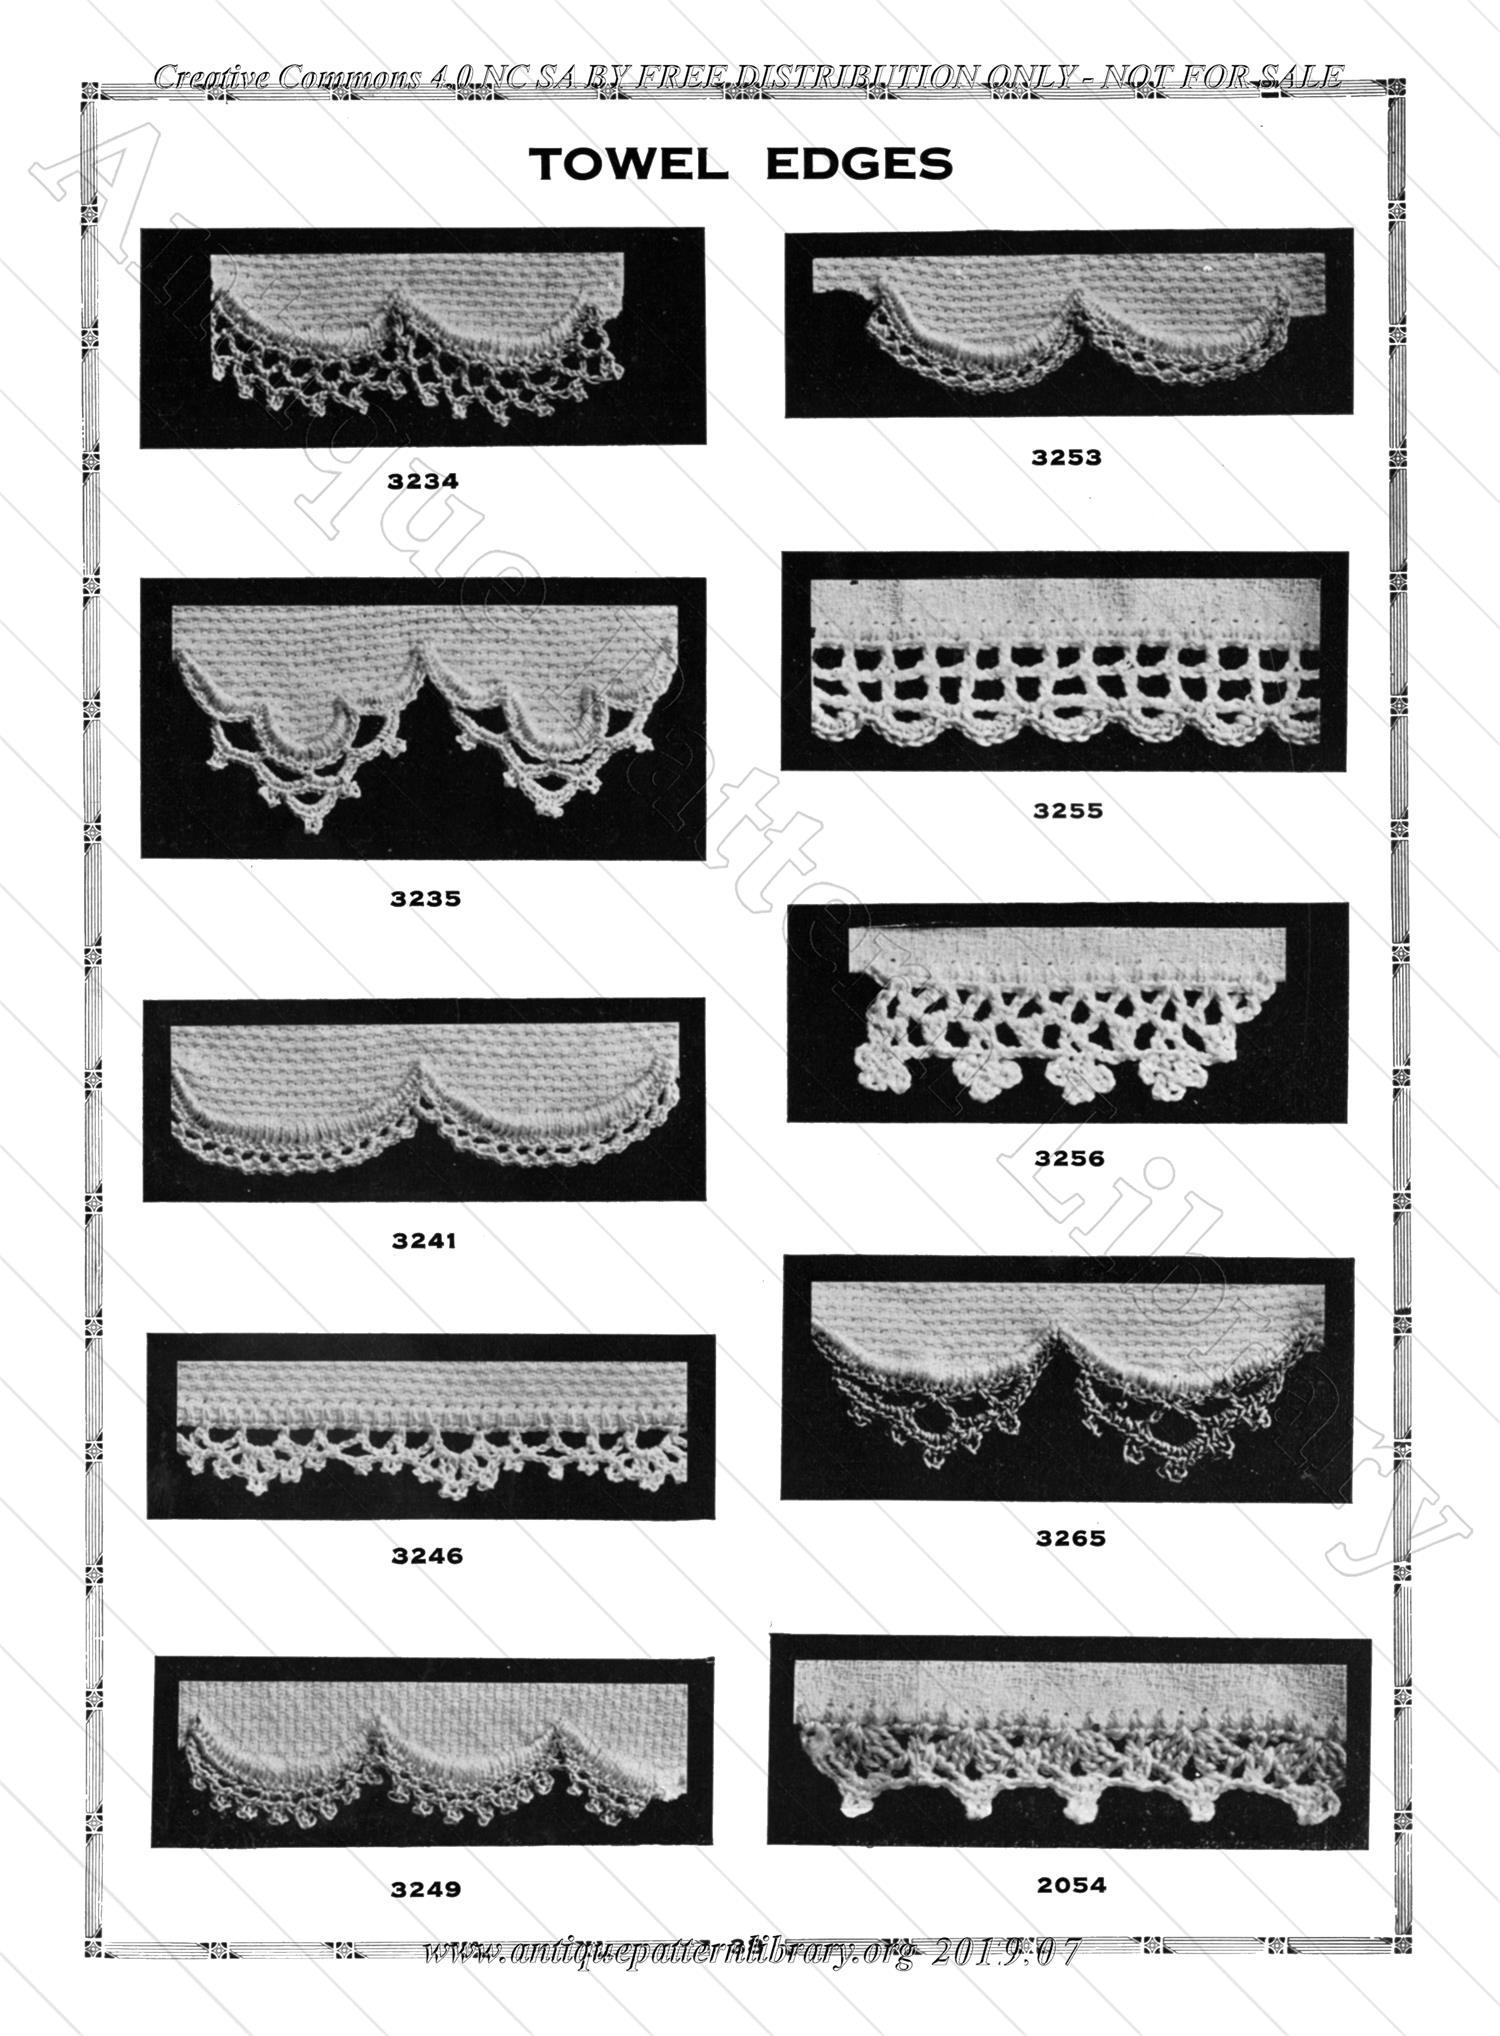 D-SW013 Royal Society Crochet Lessons No. 9